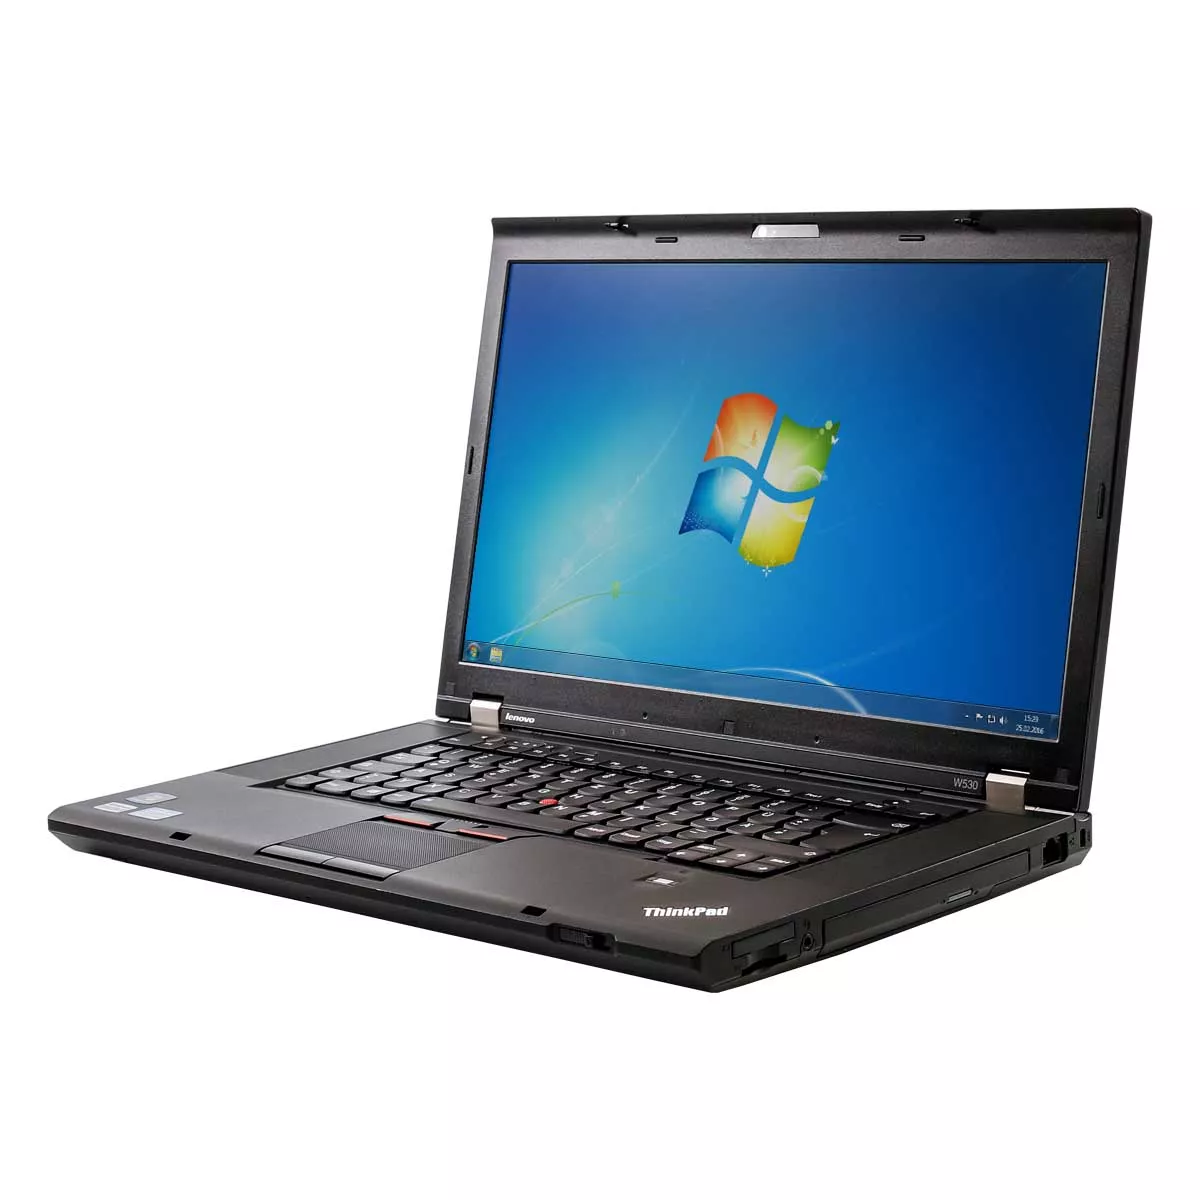 Lenovo ThinkPad W520 Quad Core i7 2720QM 2,2 GHz Webcam